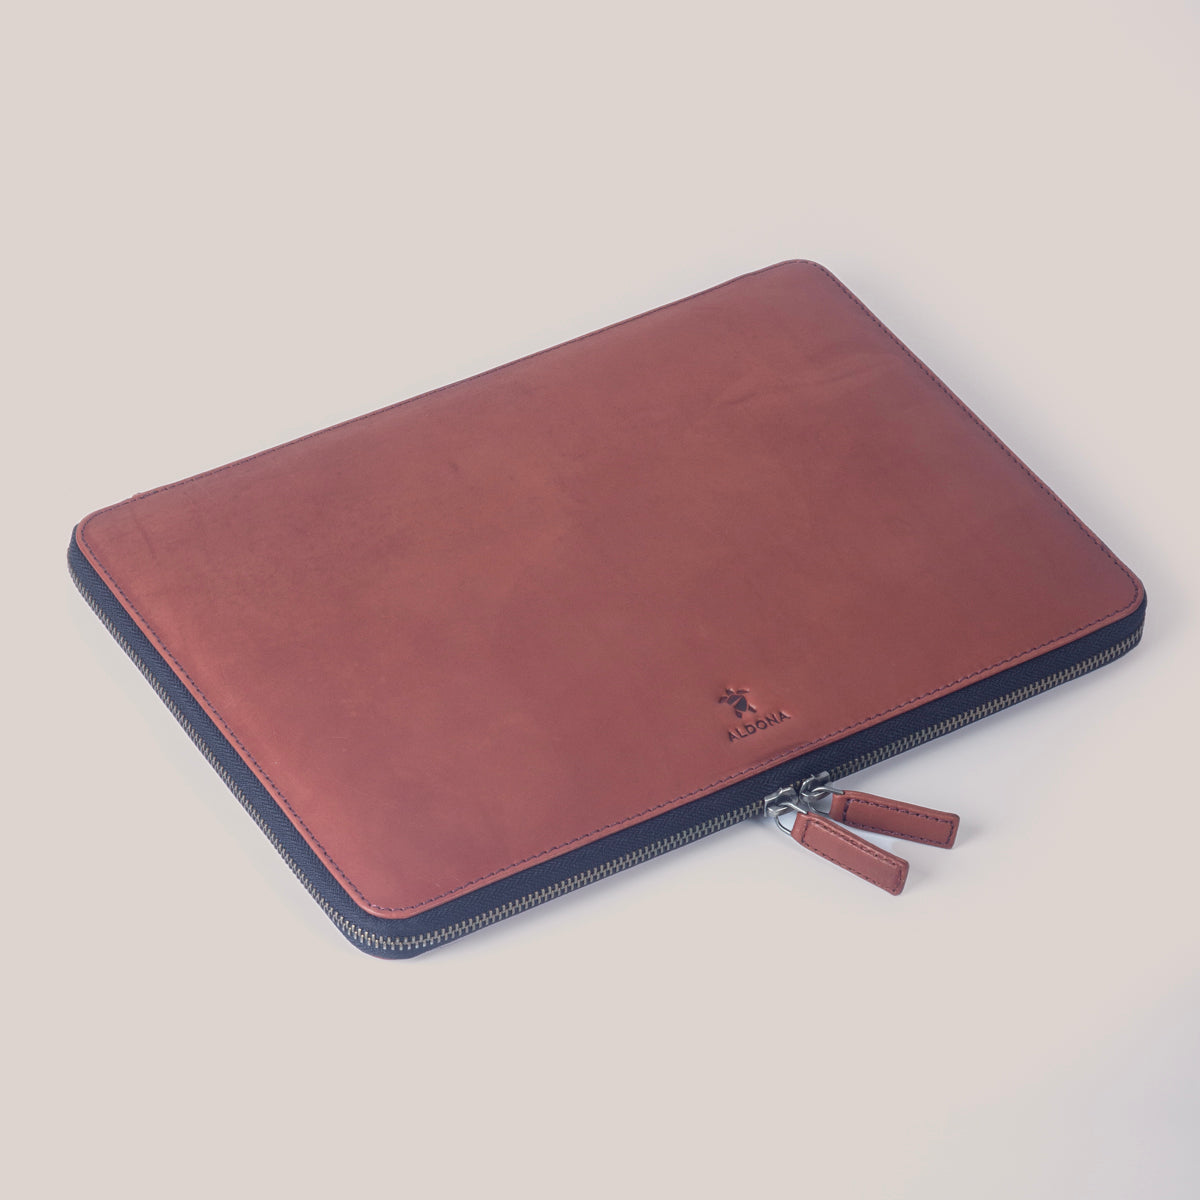 Microsoft Surface Laptop 15 Zippered Laptop Case - Cognac